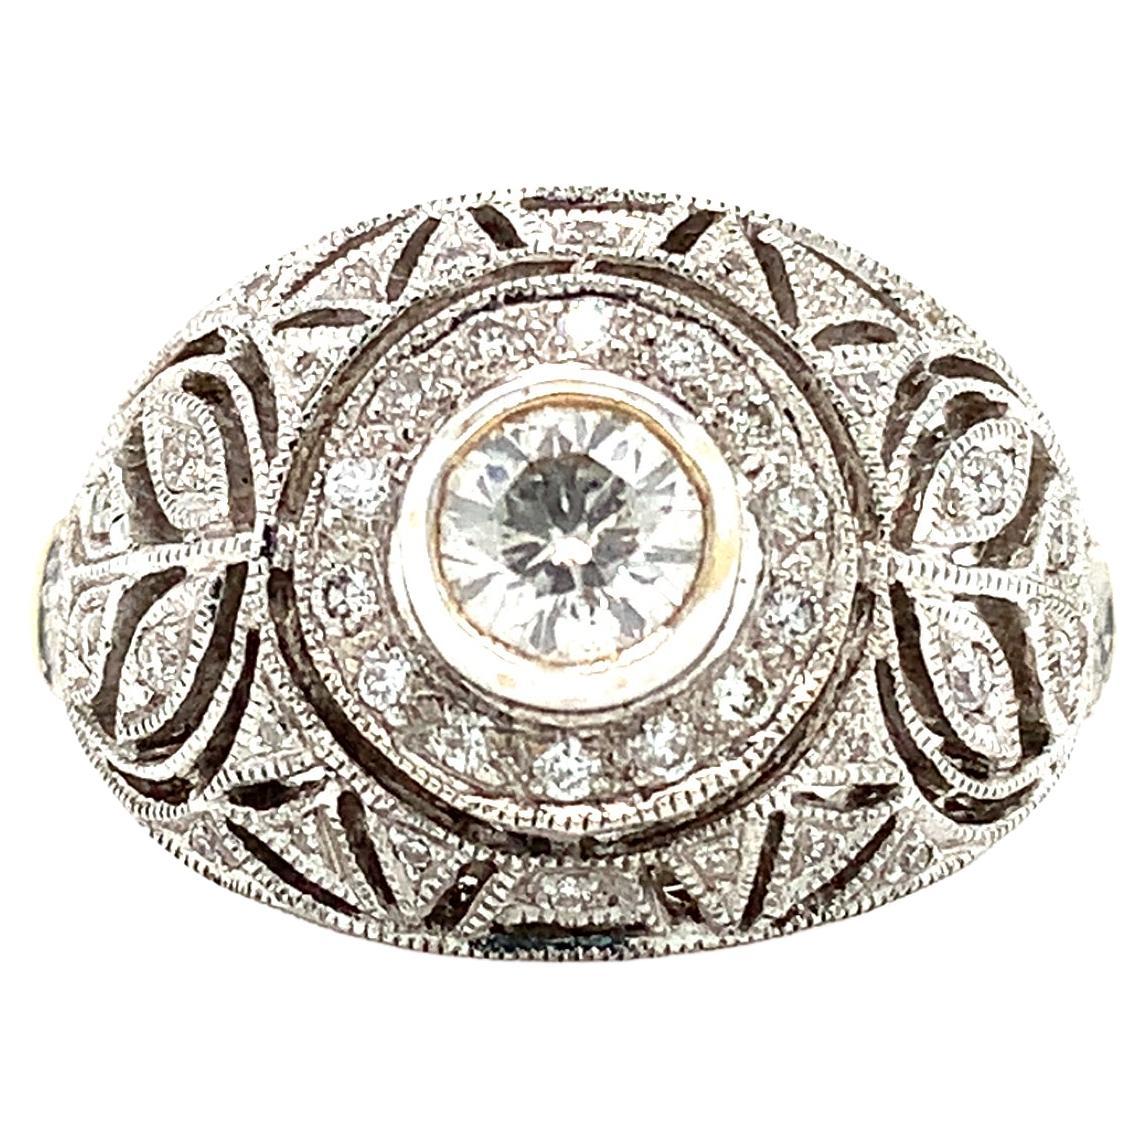 Diamond art deco dome cocktail ring 18k white gold